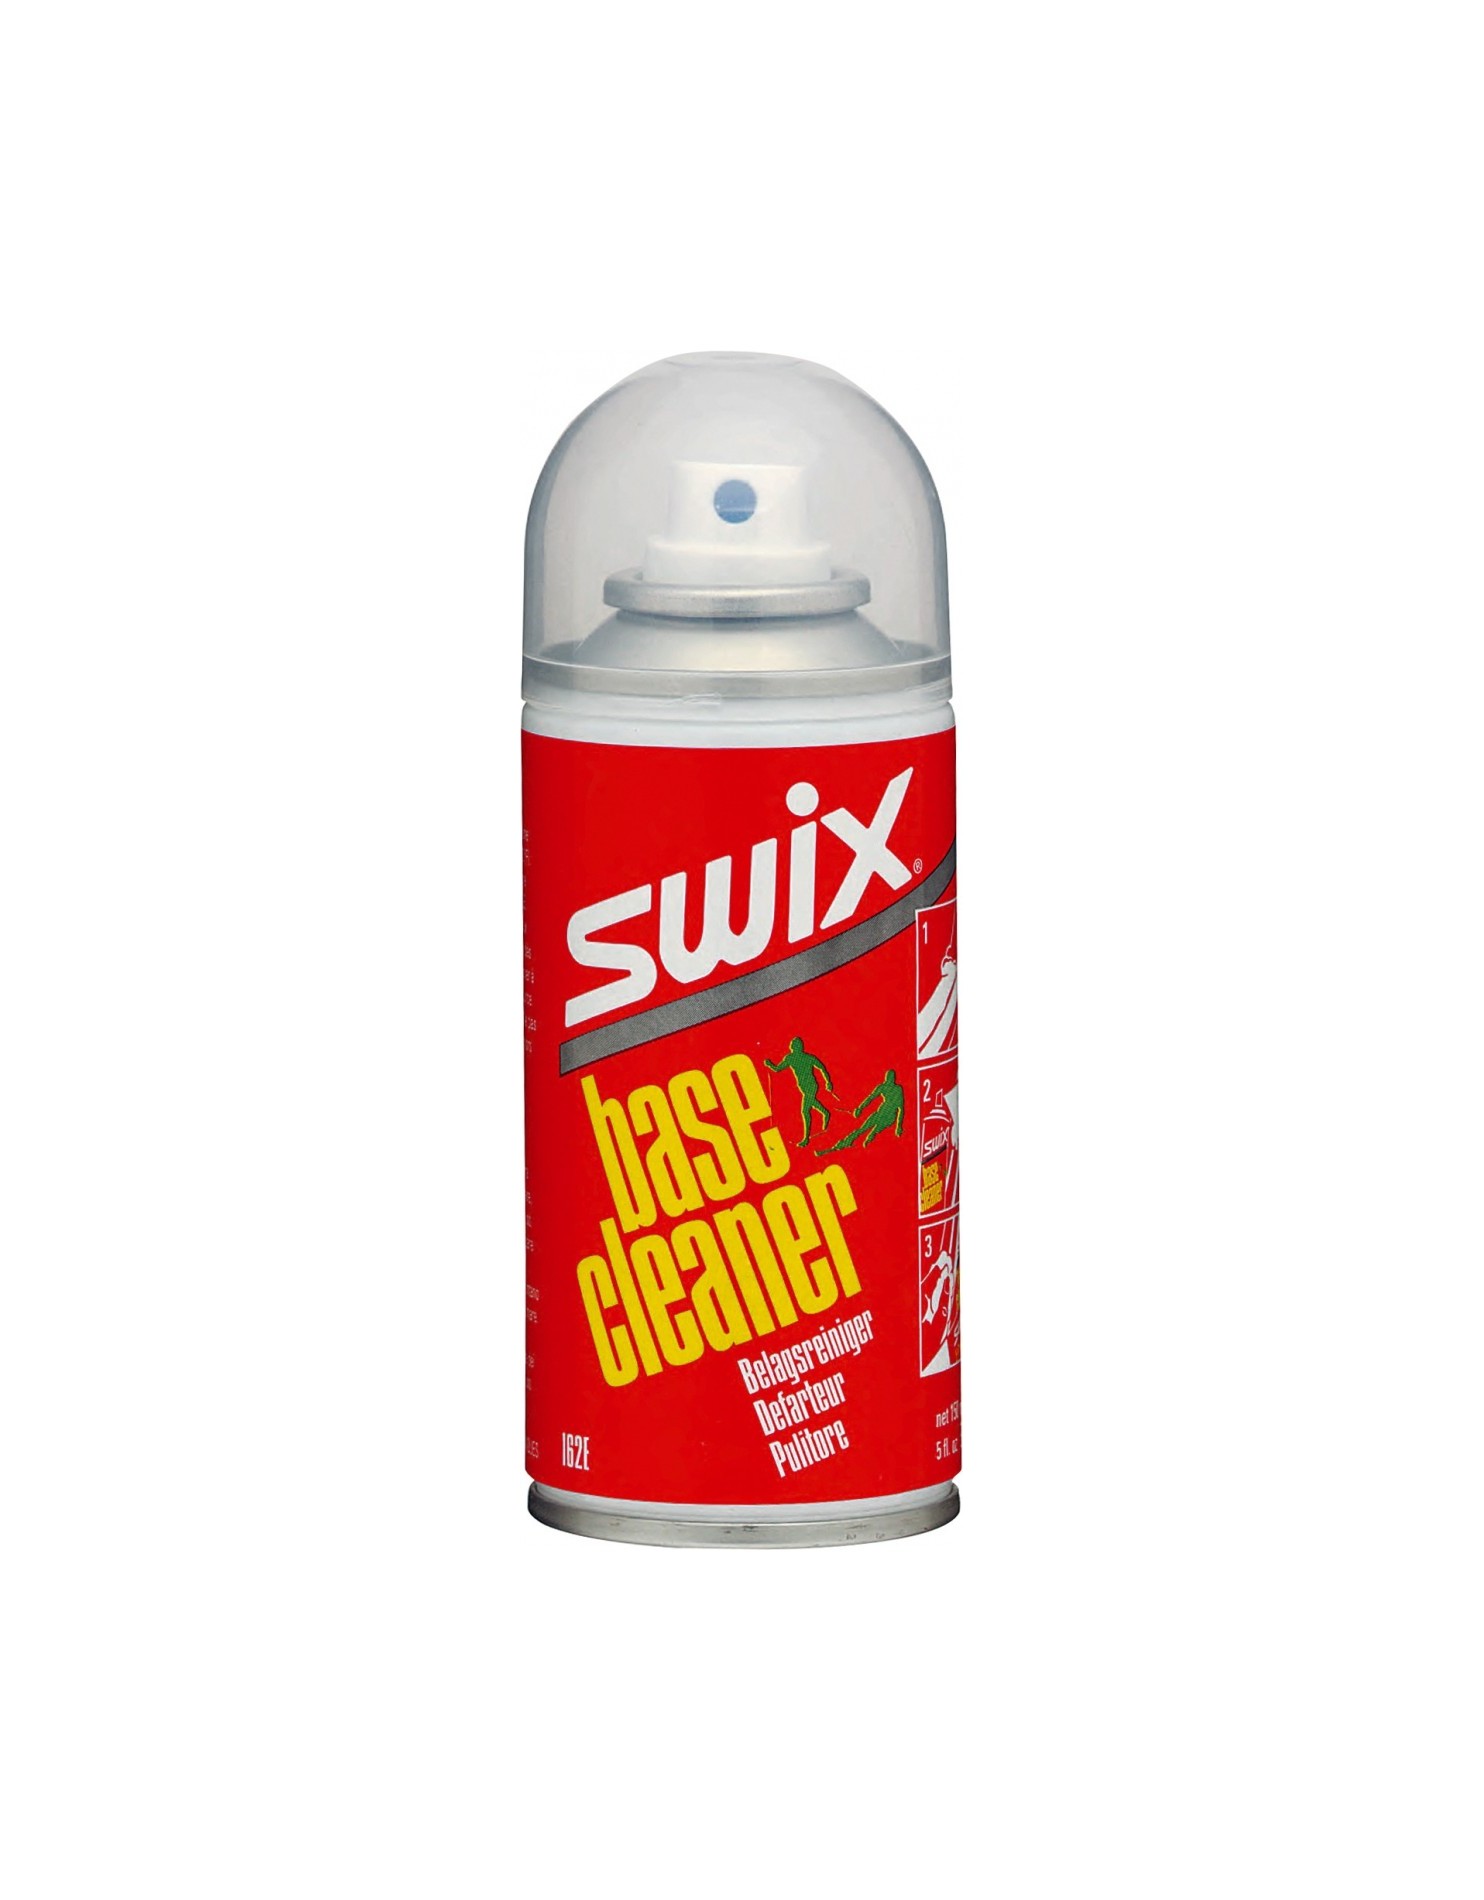 SWiX Аэрозоль Base cleaner i62C 150 мл Артикул: i62C